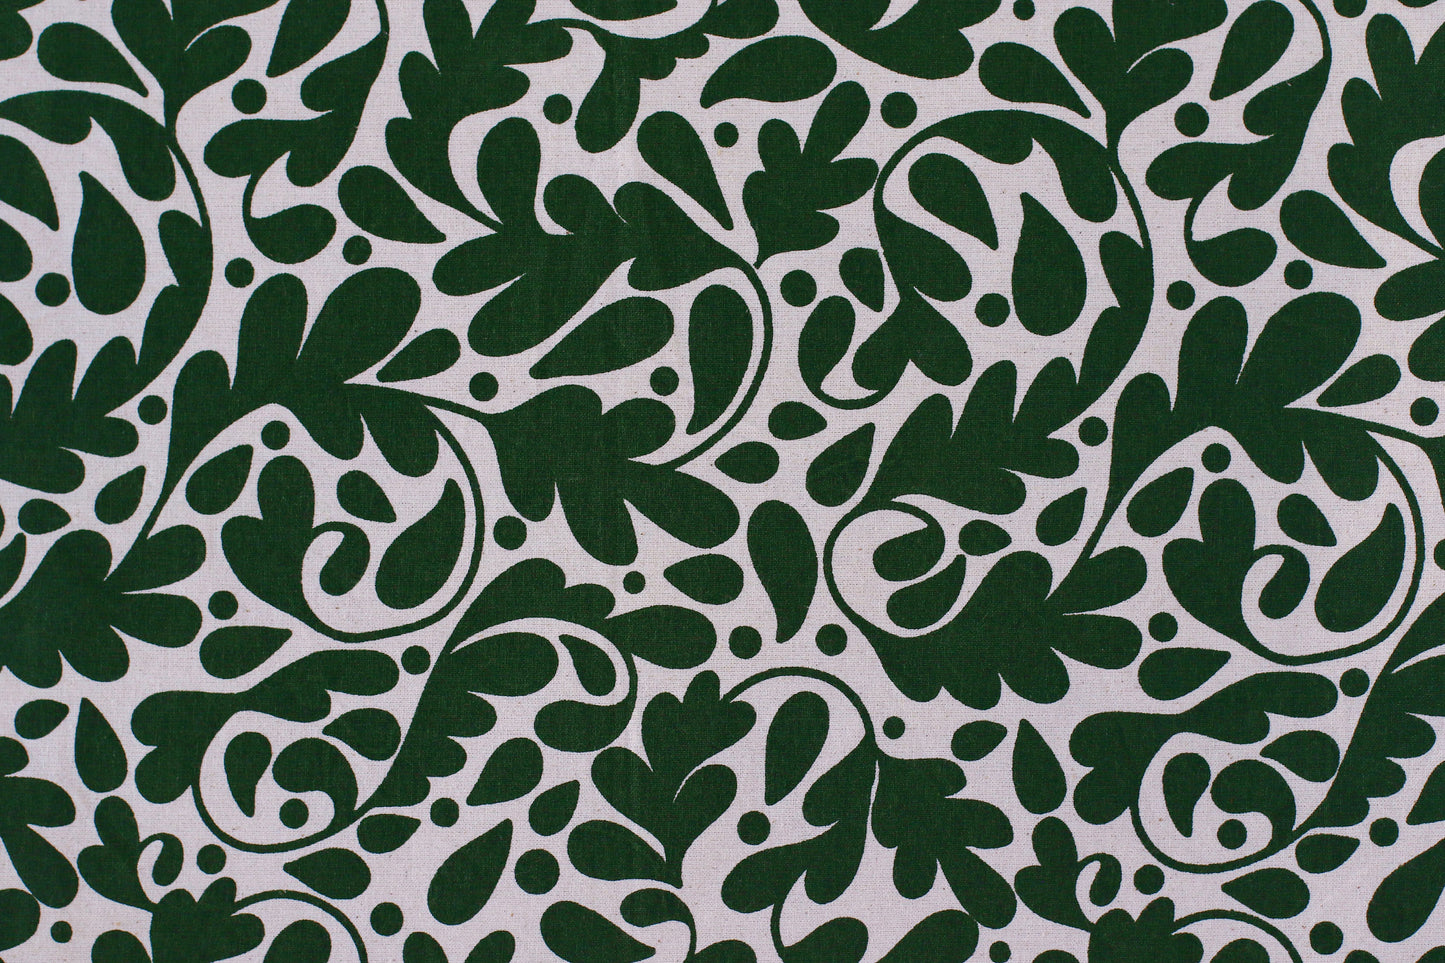 Oak leaves Textile - Dark Green - Organic White